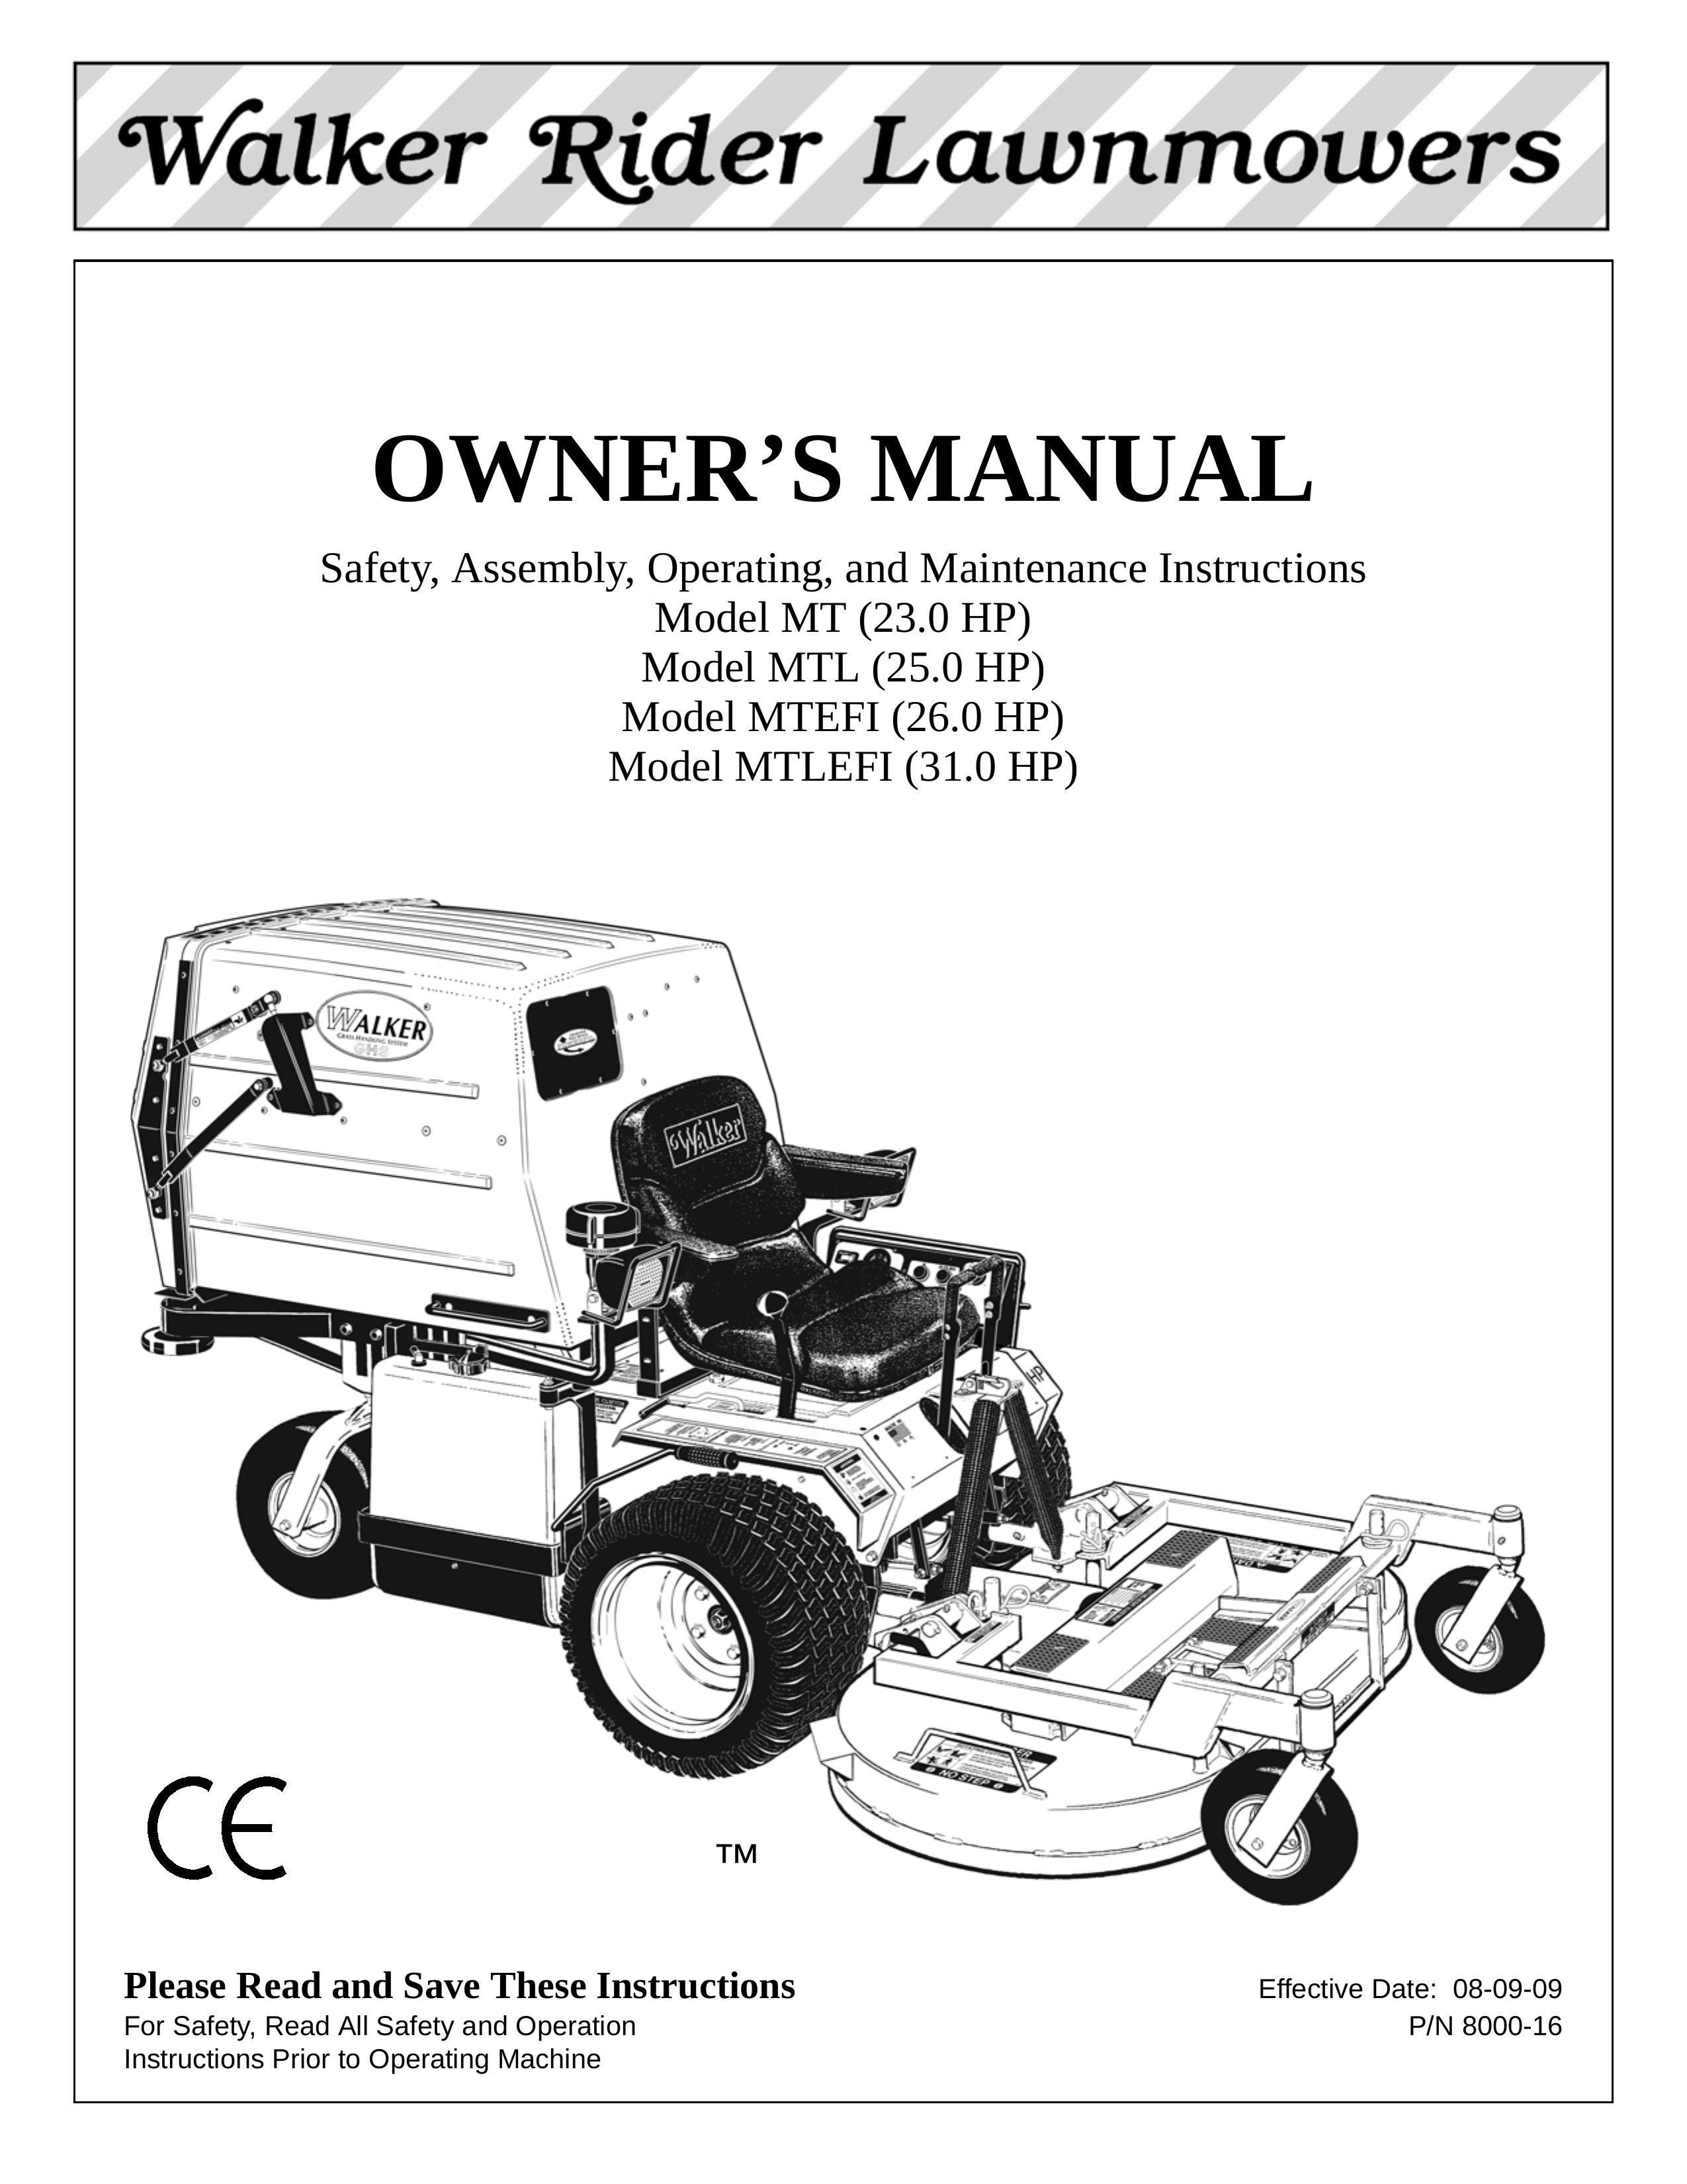 Walker Model MTLEFI Lawn Mower User Manual